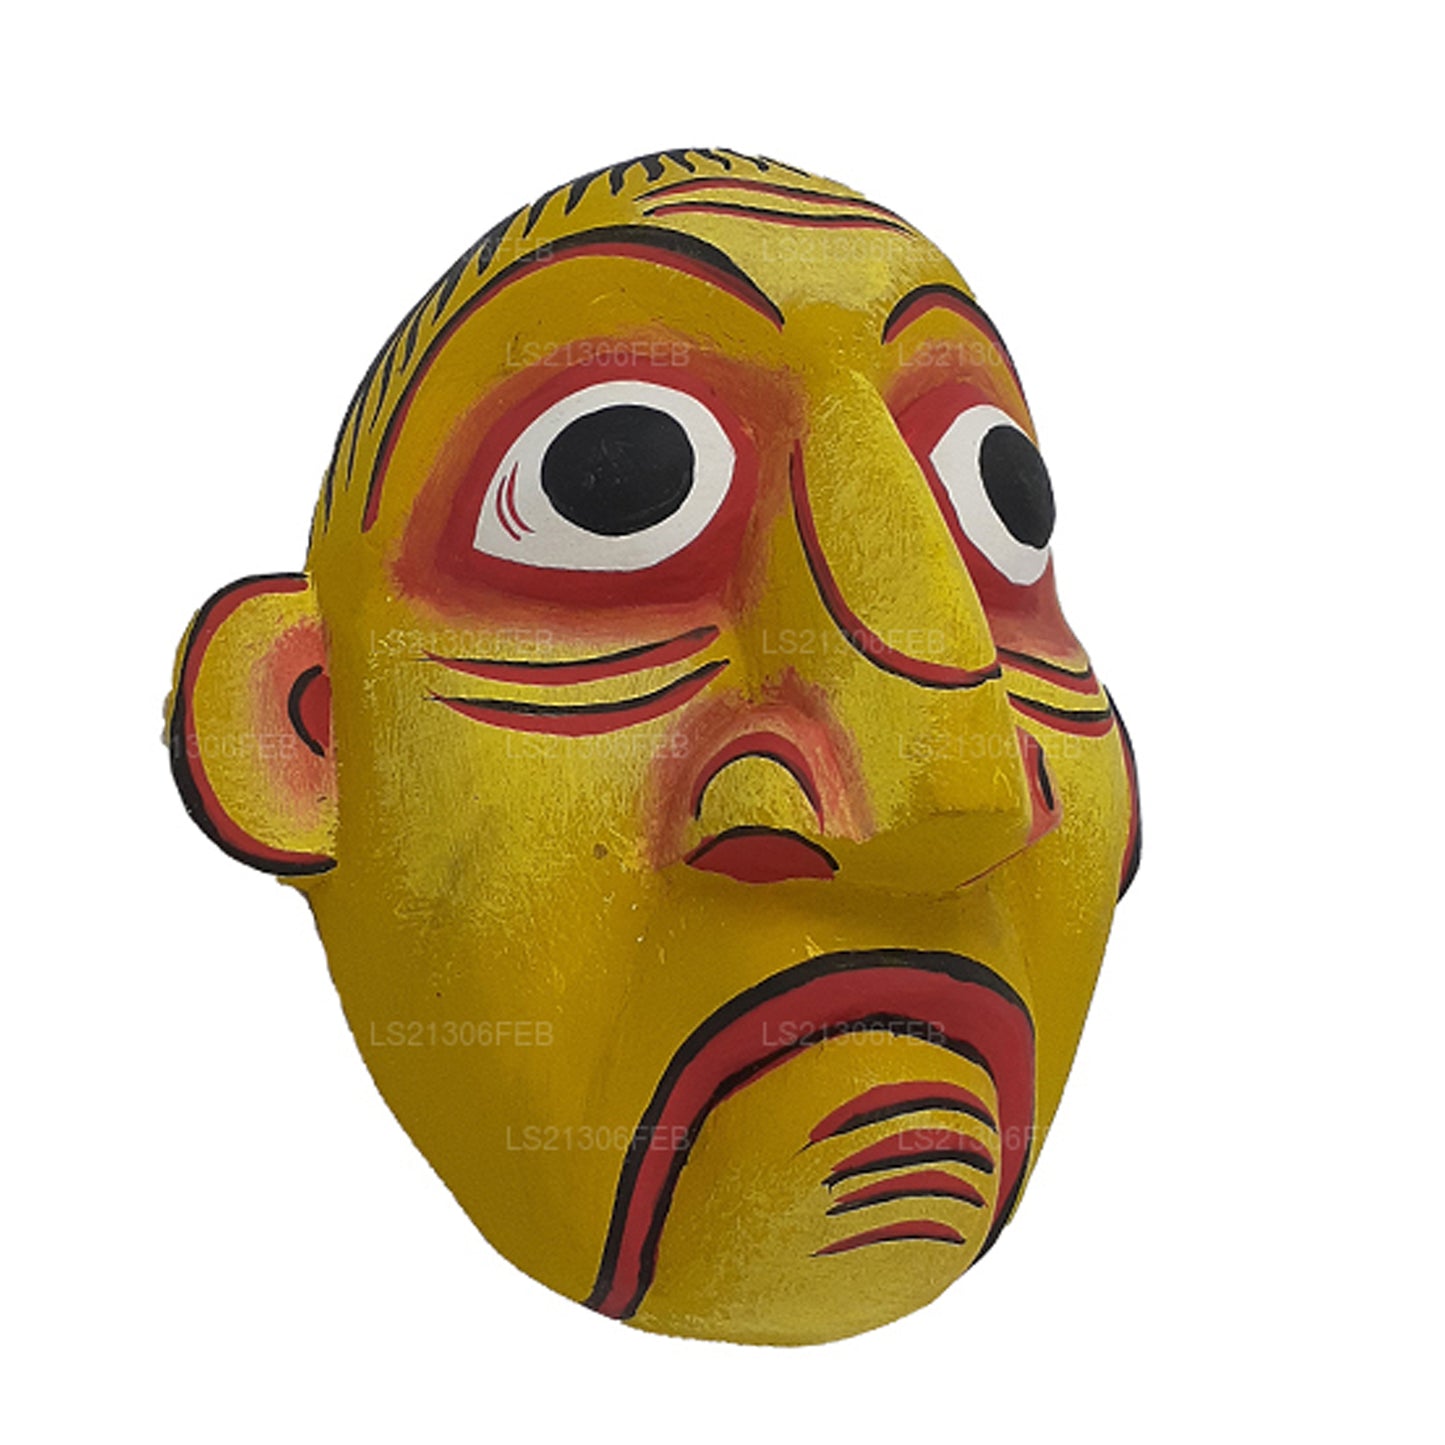 <p>(SKU: LS21306FEB) Gulma Sanniya Mask (Standard, 15cm Height)</p>